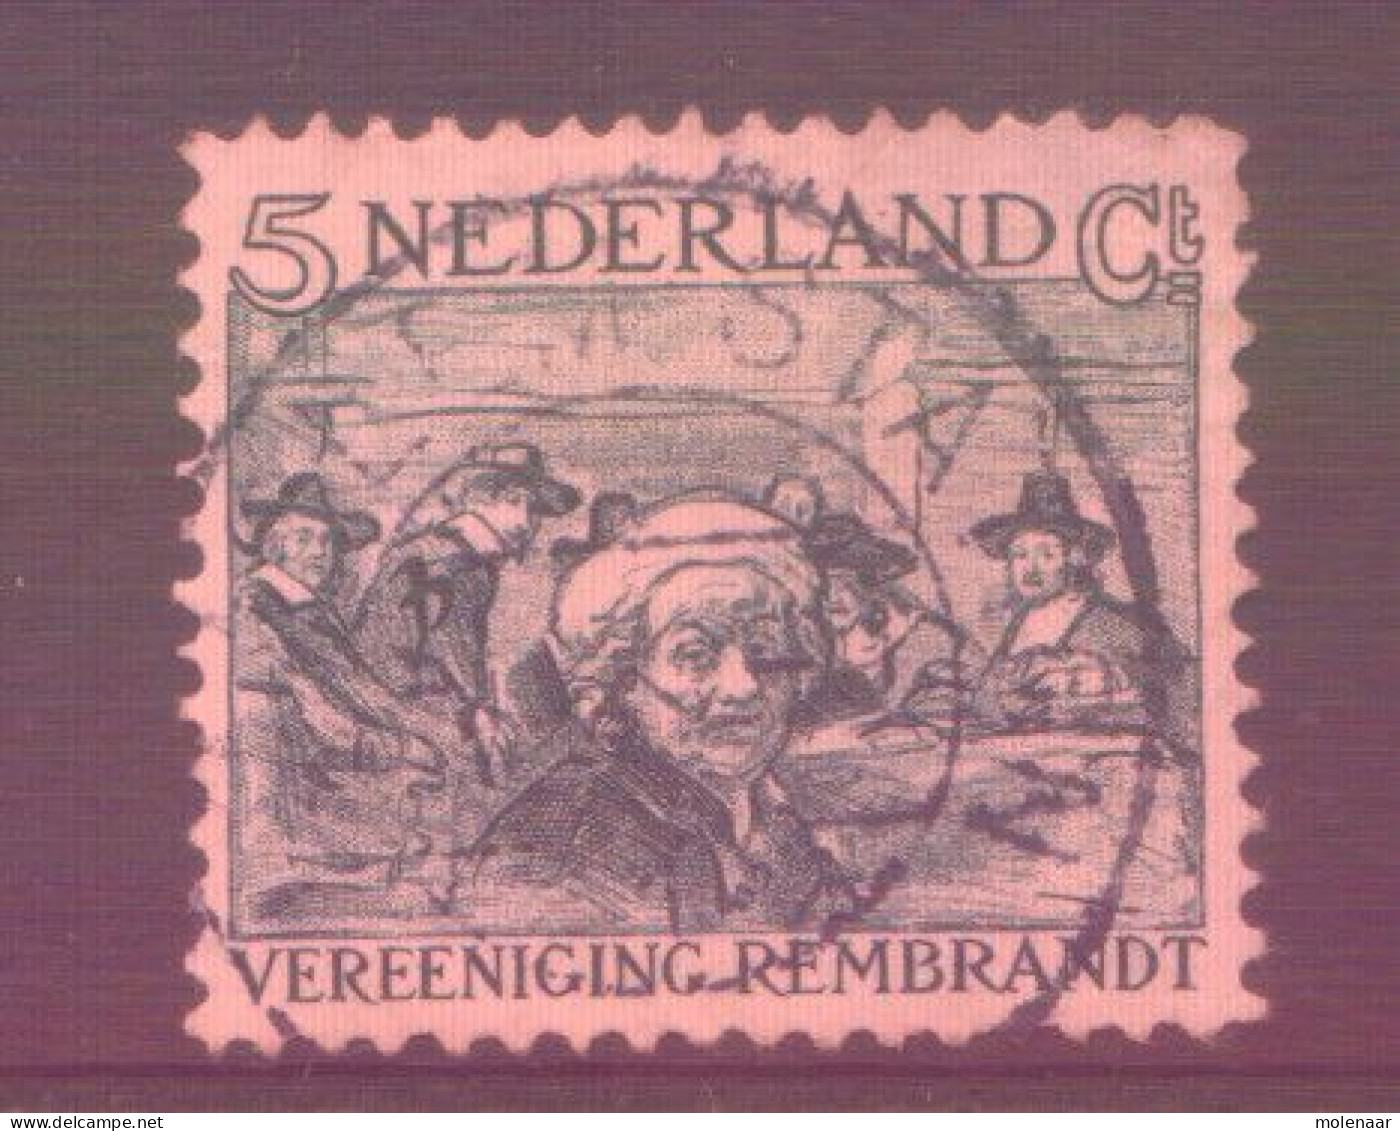 Postzegels > Europa > Nederland > Periode 1891-1948 (Wilhelmina) > 1891-1909 > 229 Gebruikt (11761) - Usati